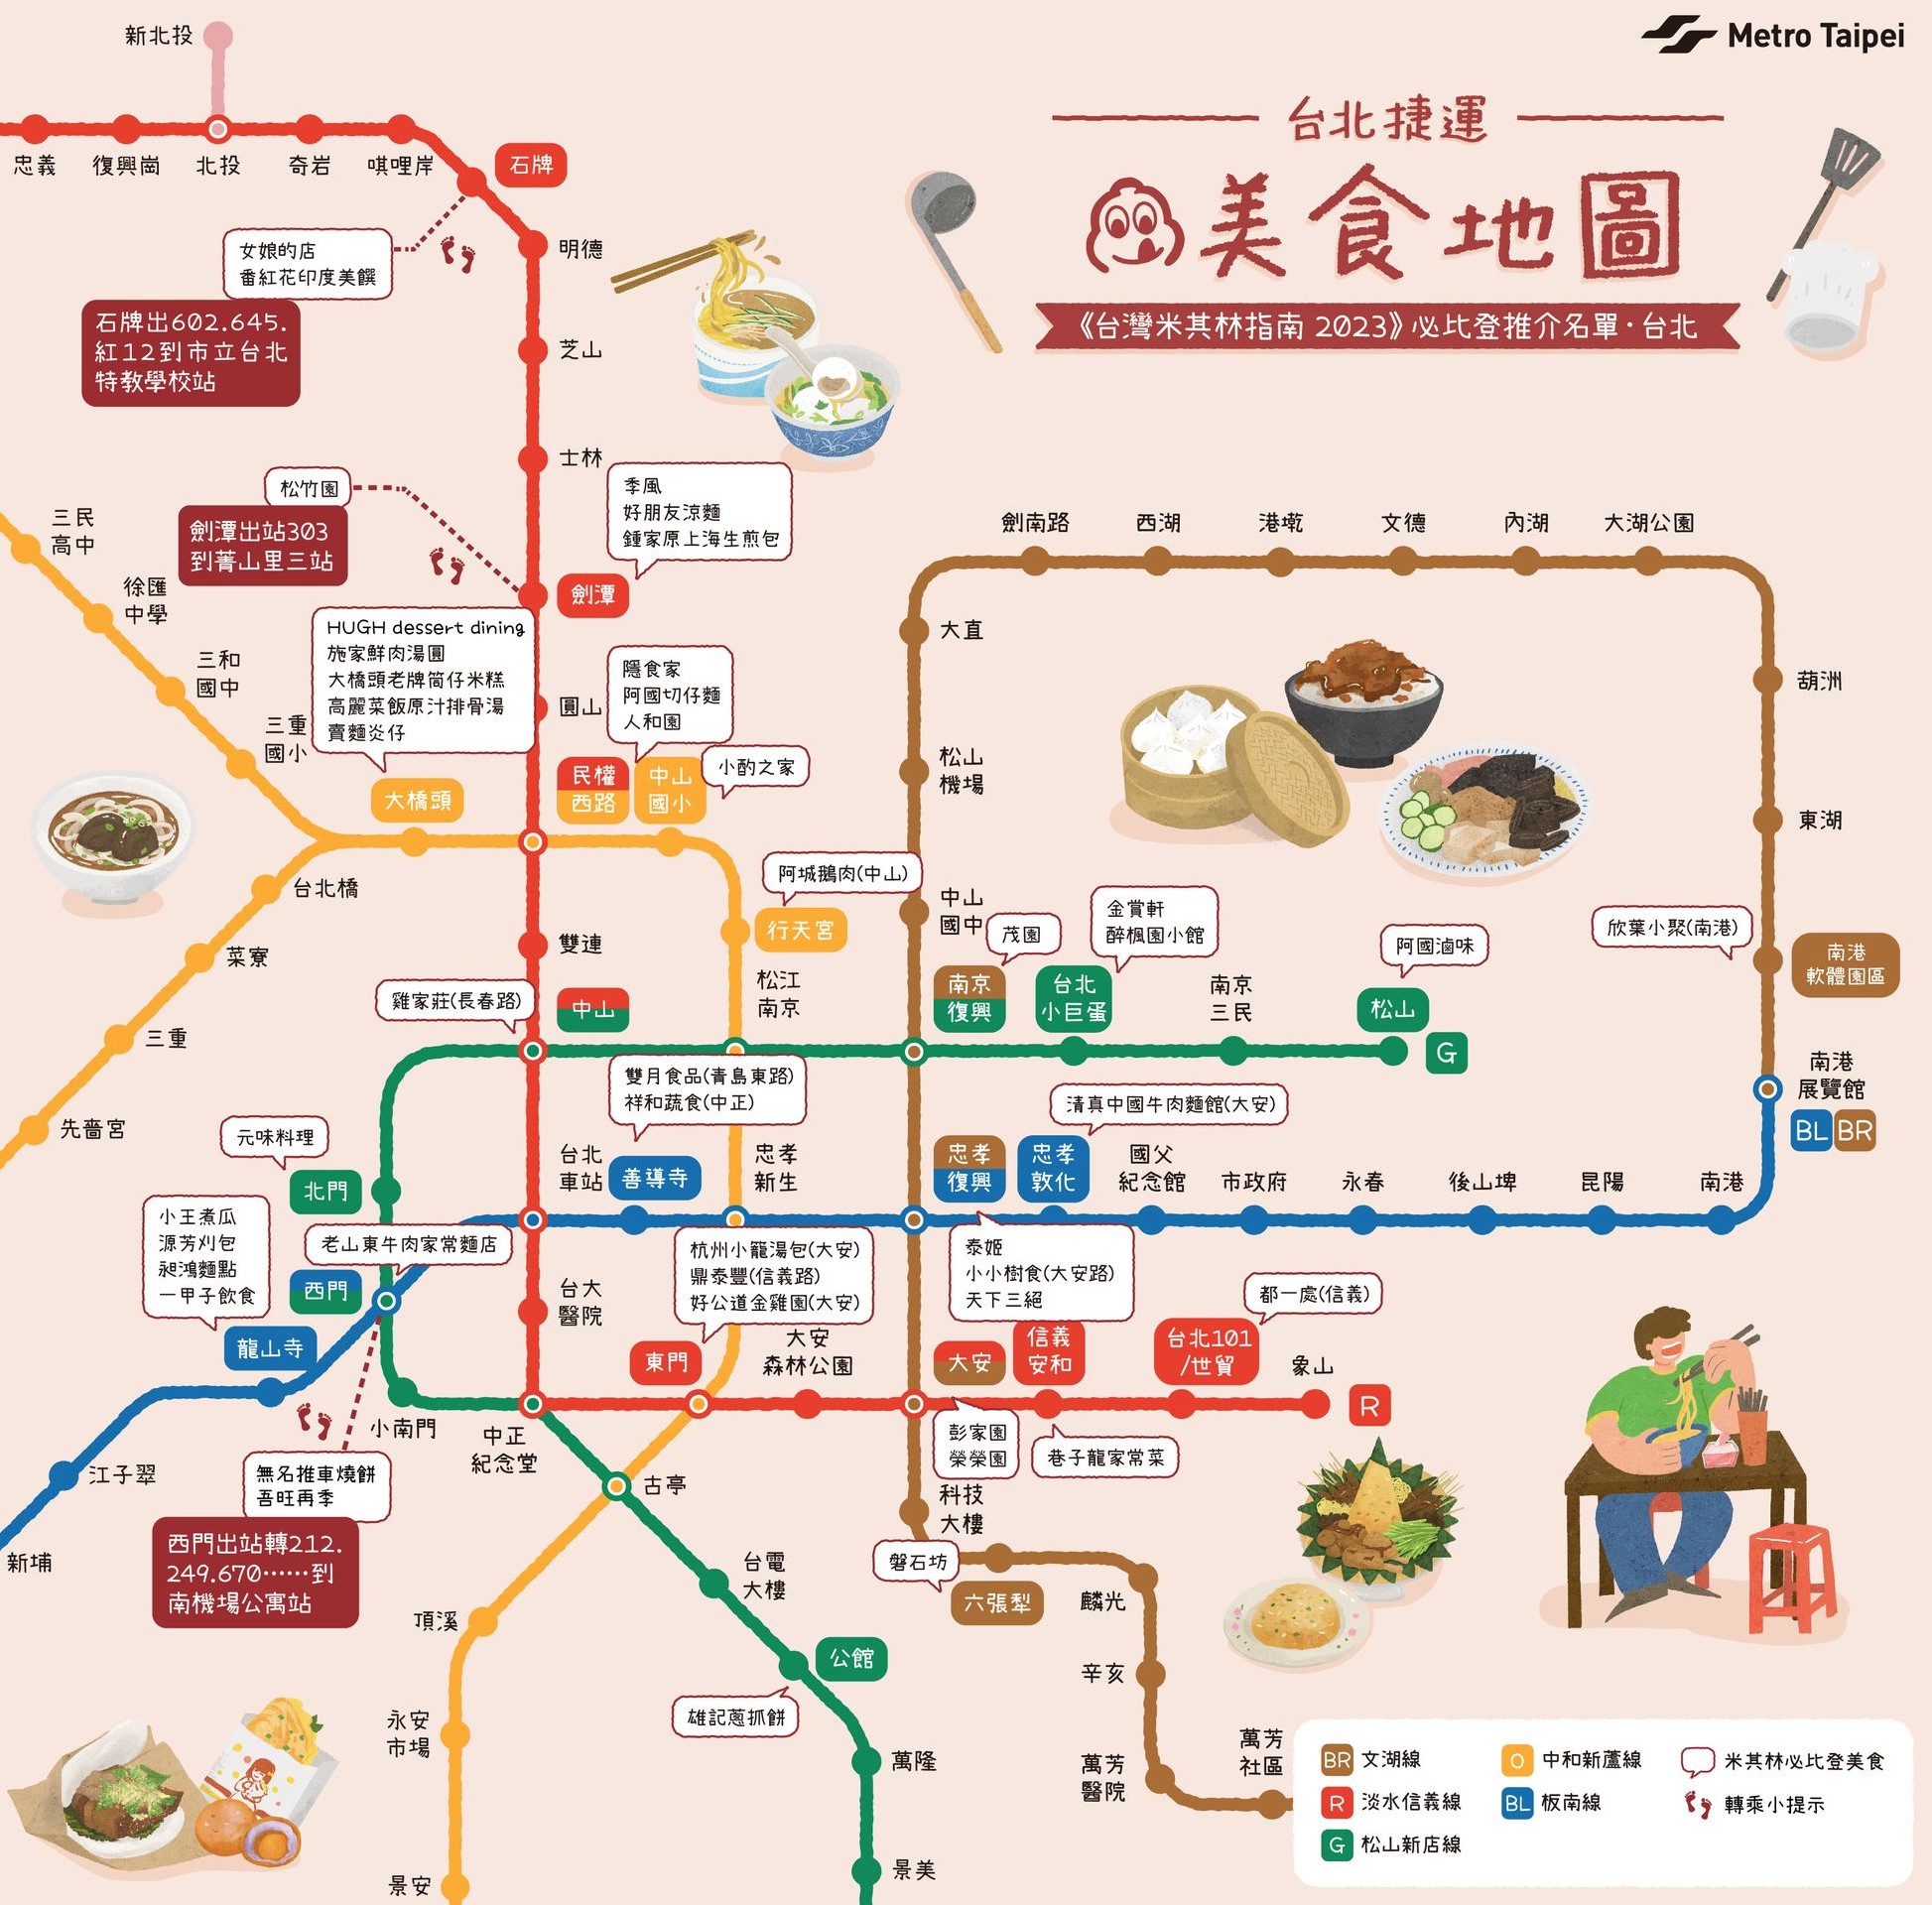 Perusahaan MRT Taipei meluncurkan peta kuliner Michelin.  (Sumber foto : Facebook Metro Taipei)